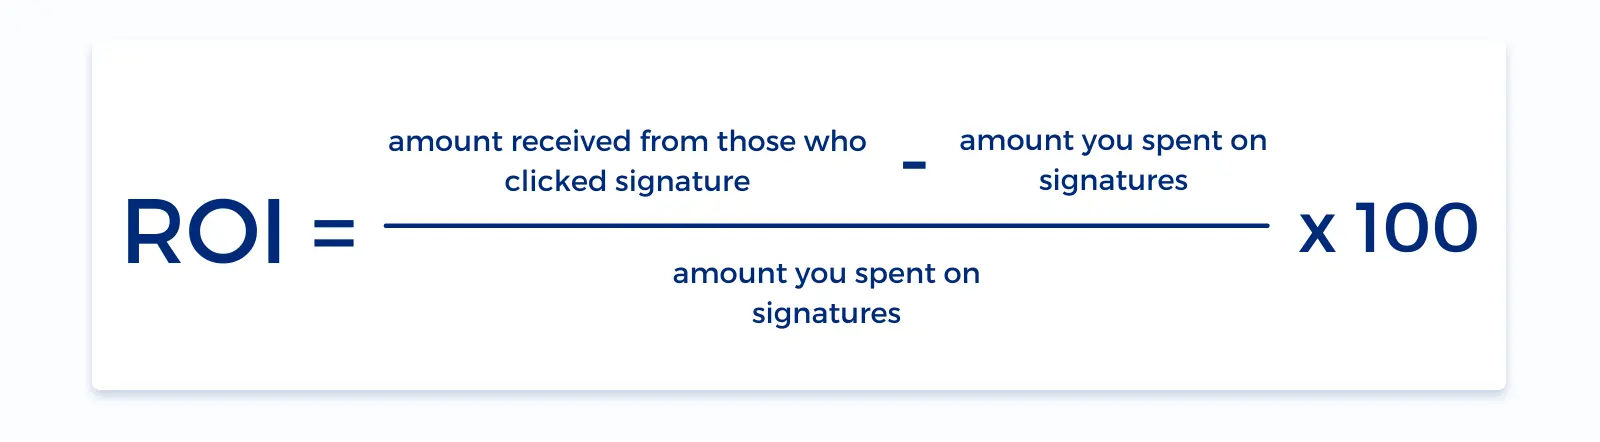 ROI of email signature marketing